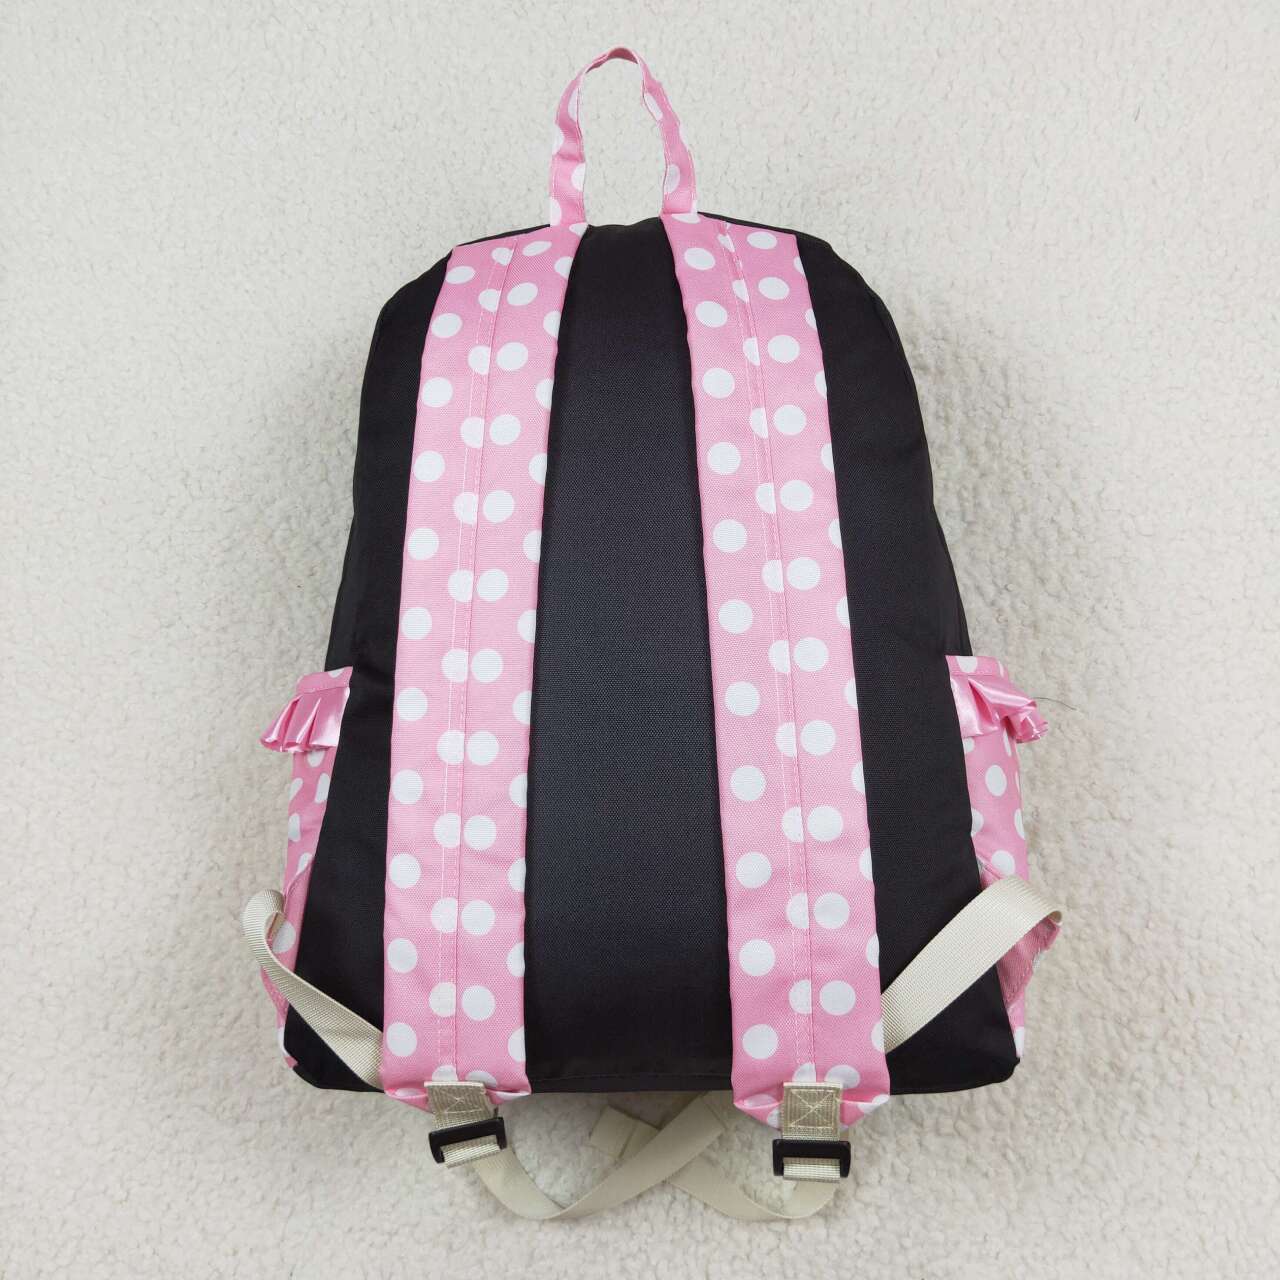 BA0183 Cartoon polka dot pink and black backpack